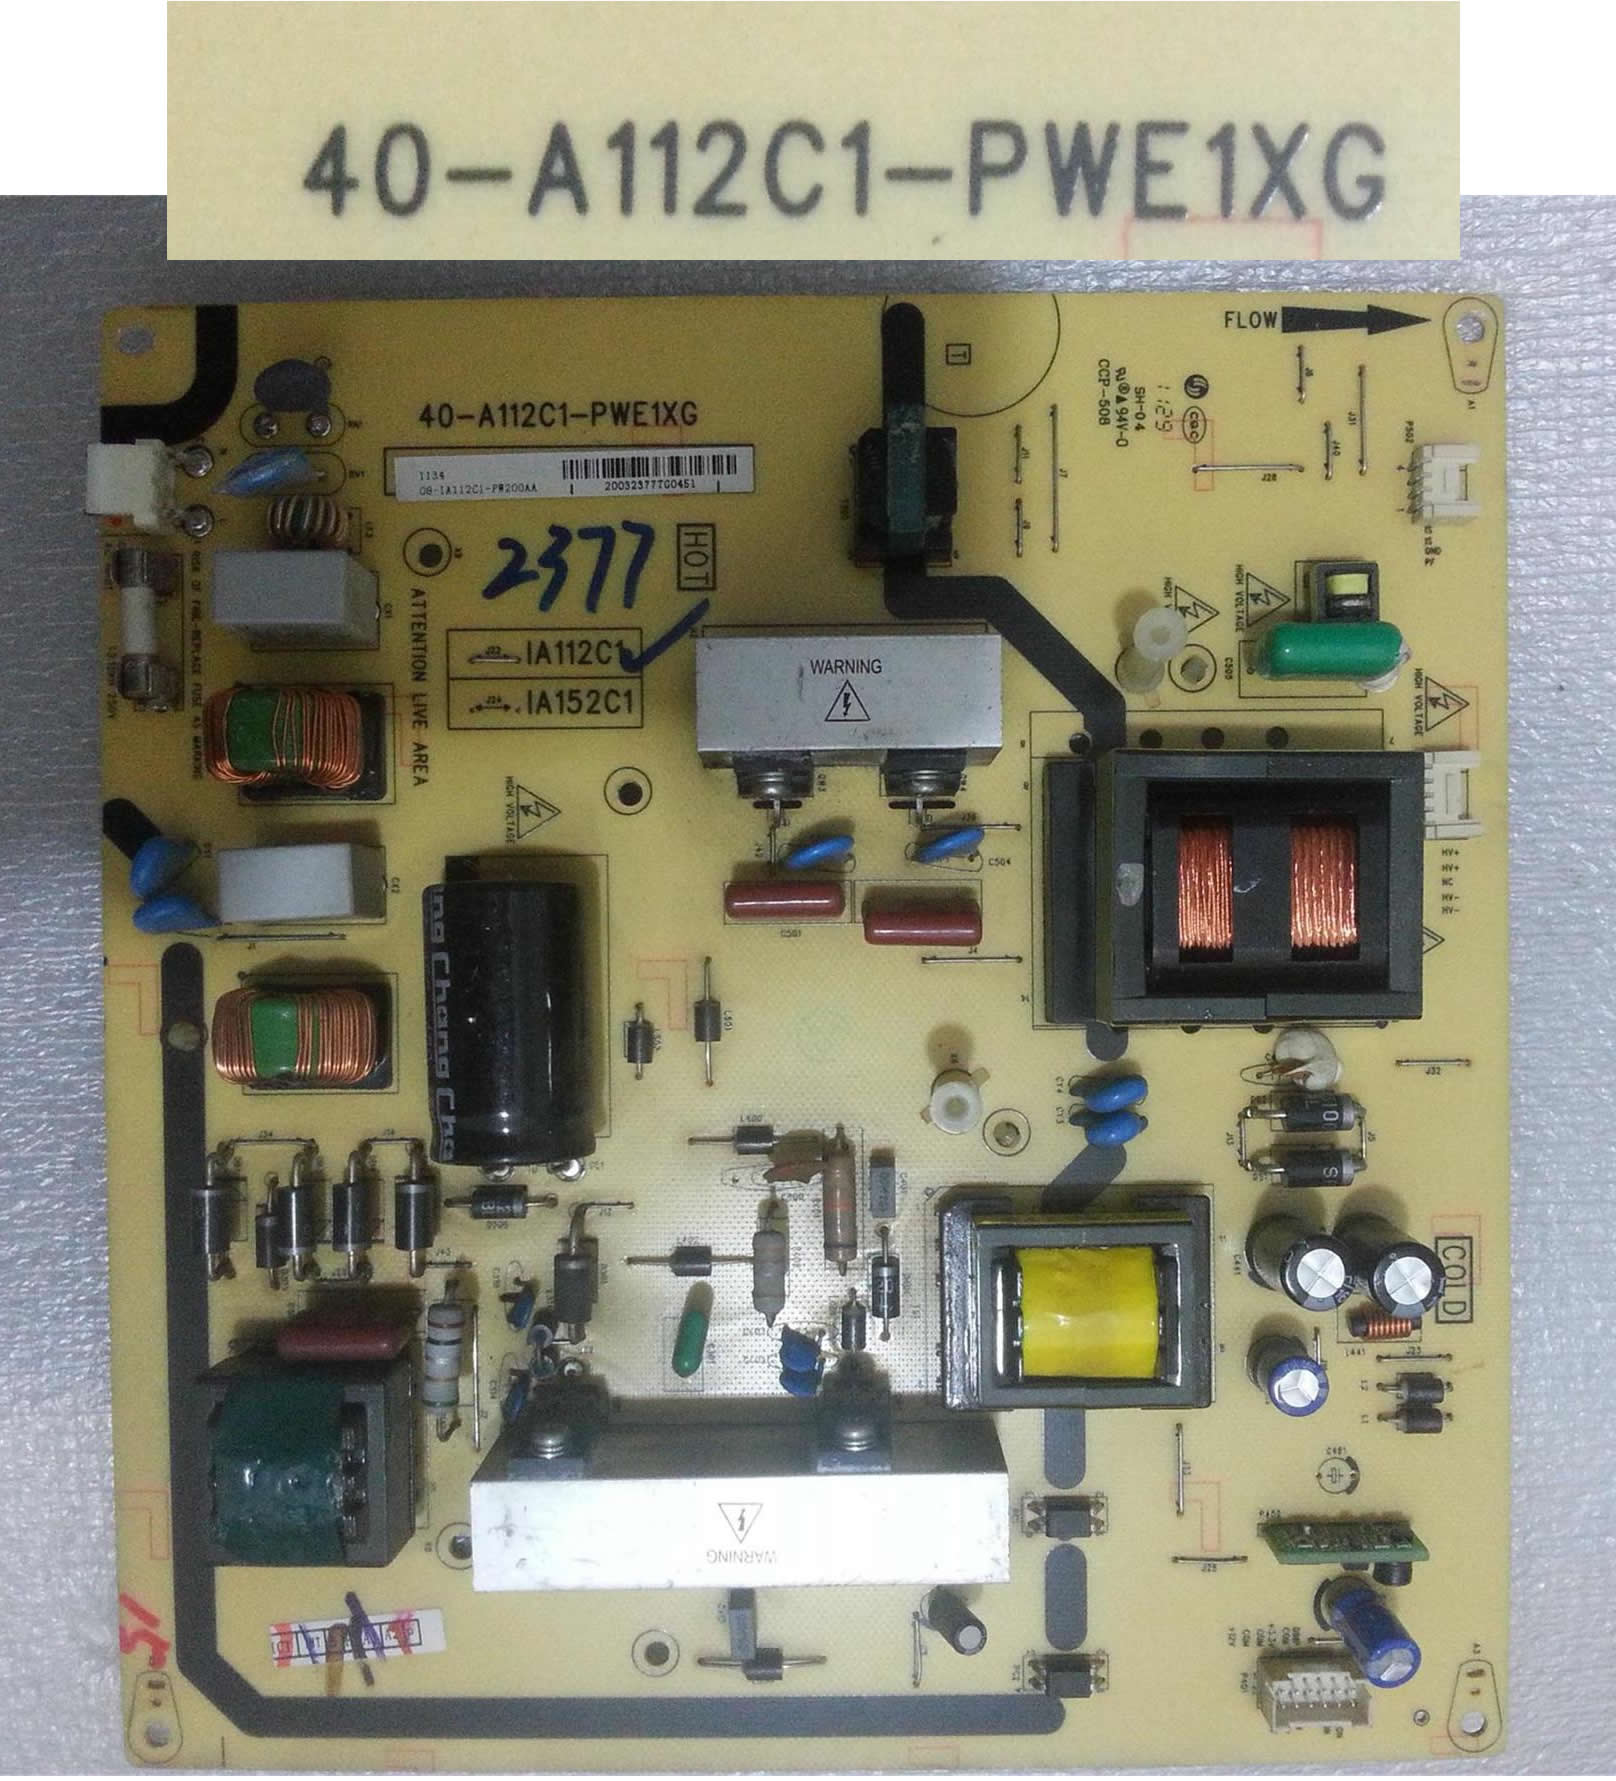 40-A112C1-PWE1XG 08-IA152C1-PW200AA power board